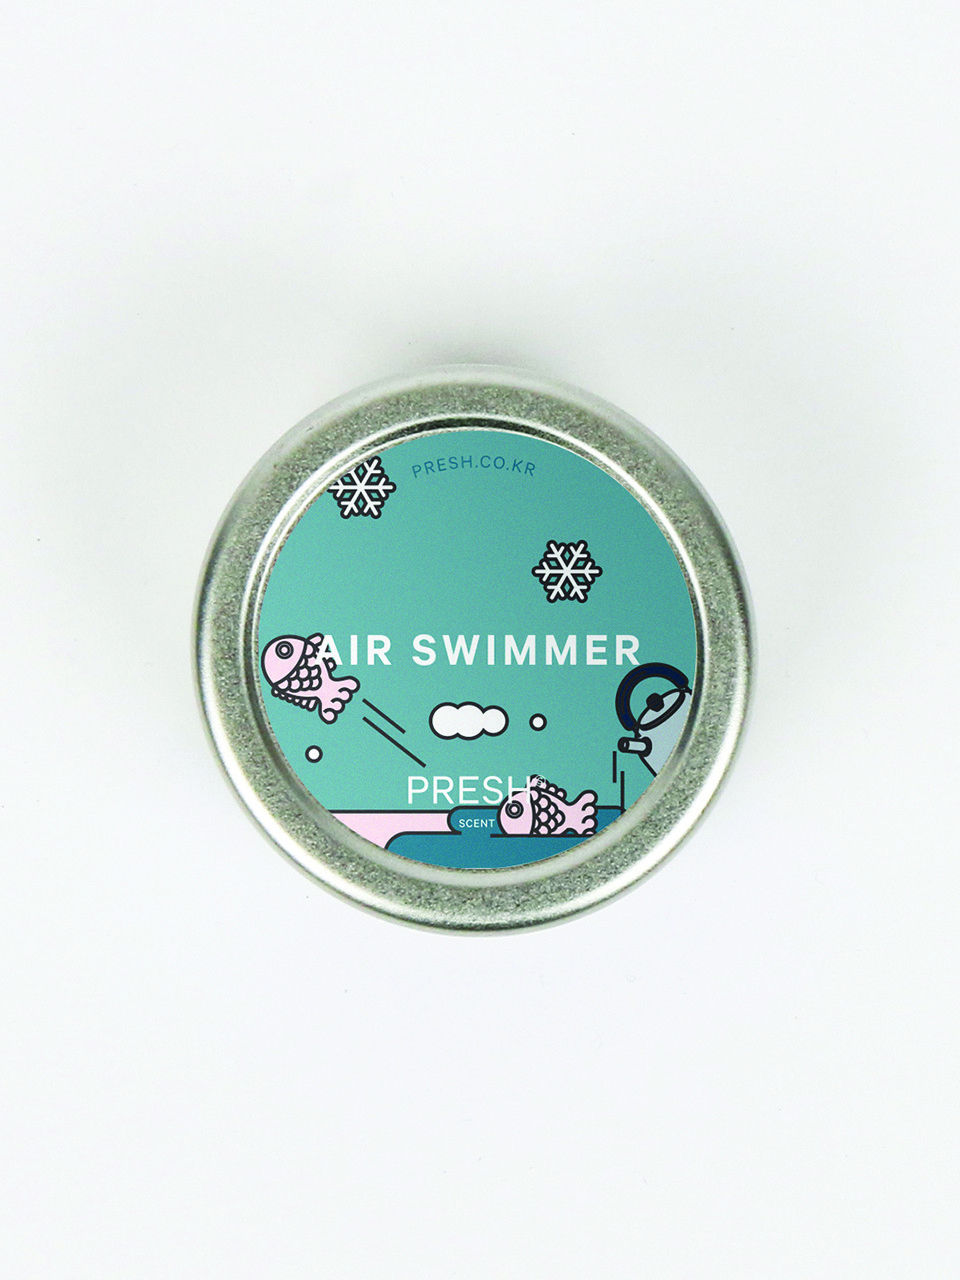 skincare-kbeauty-glowtime-Presh Air Swimmer